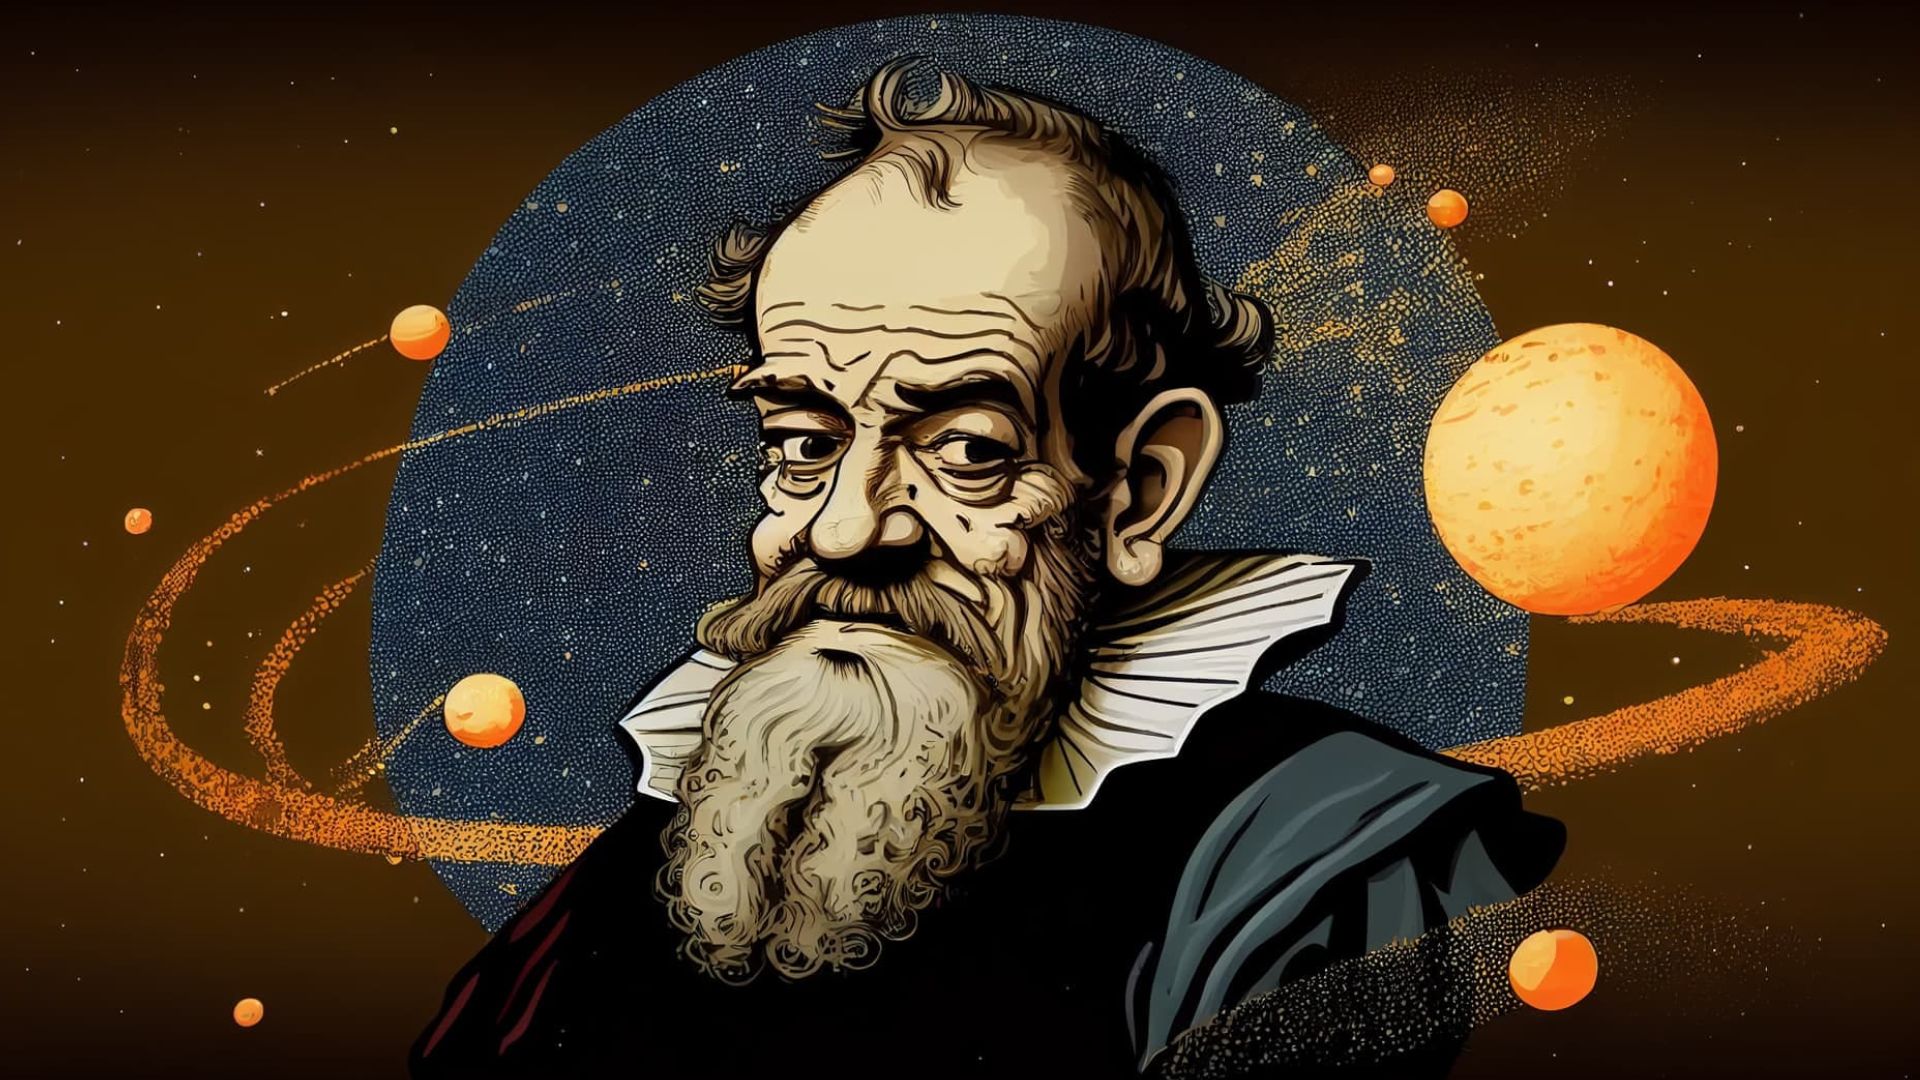 Illustration Of Galileo Galilei And Space